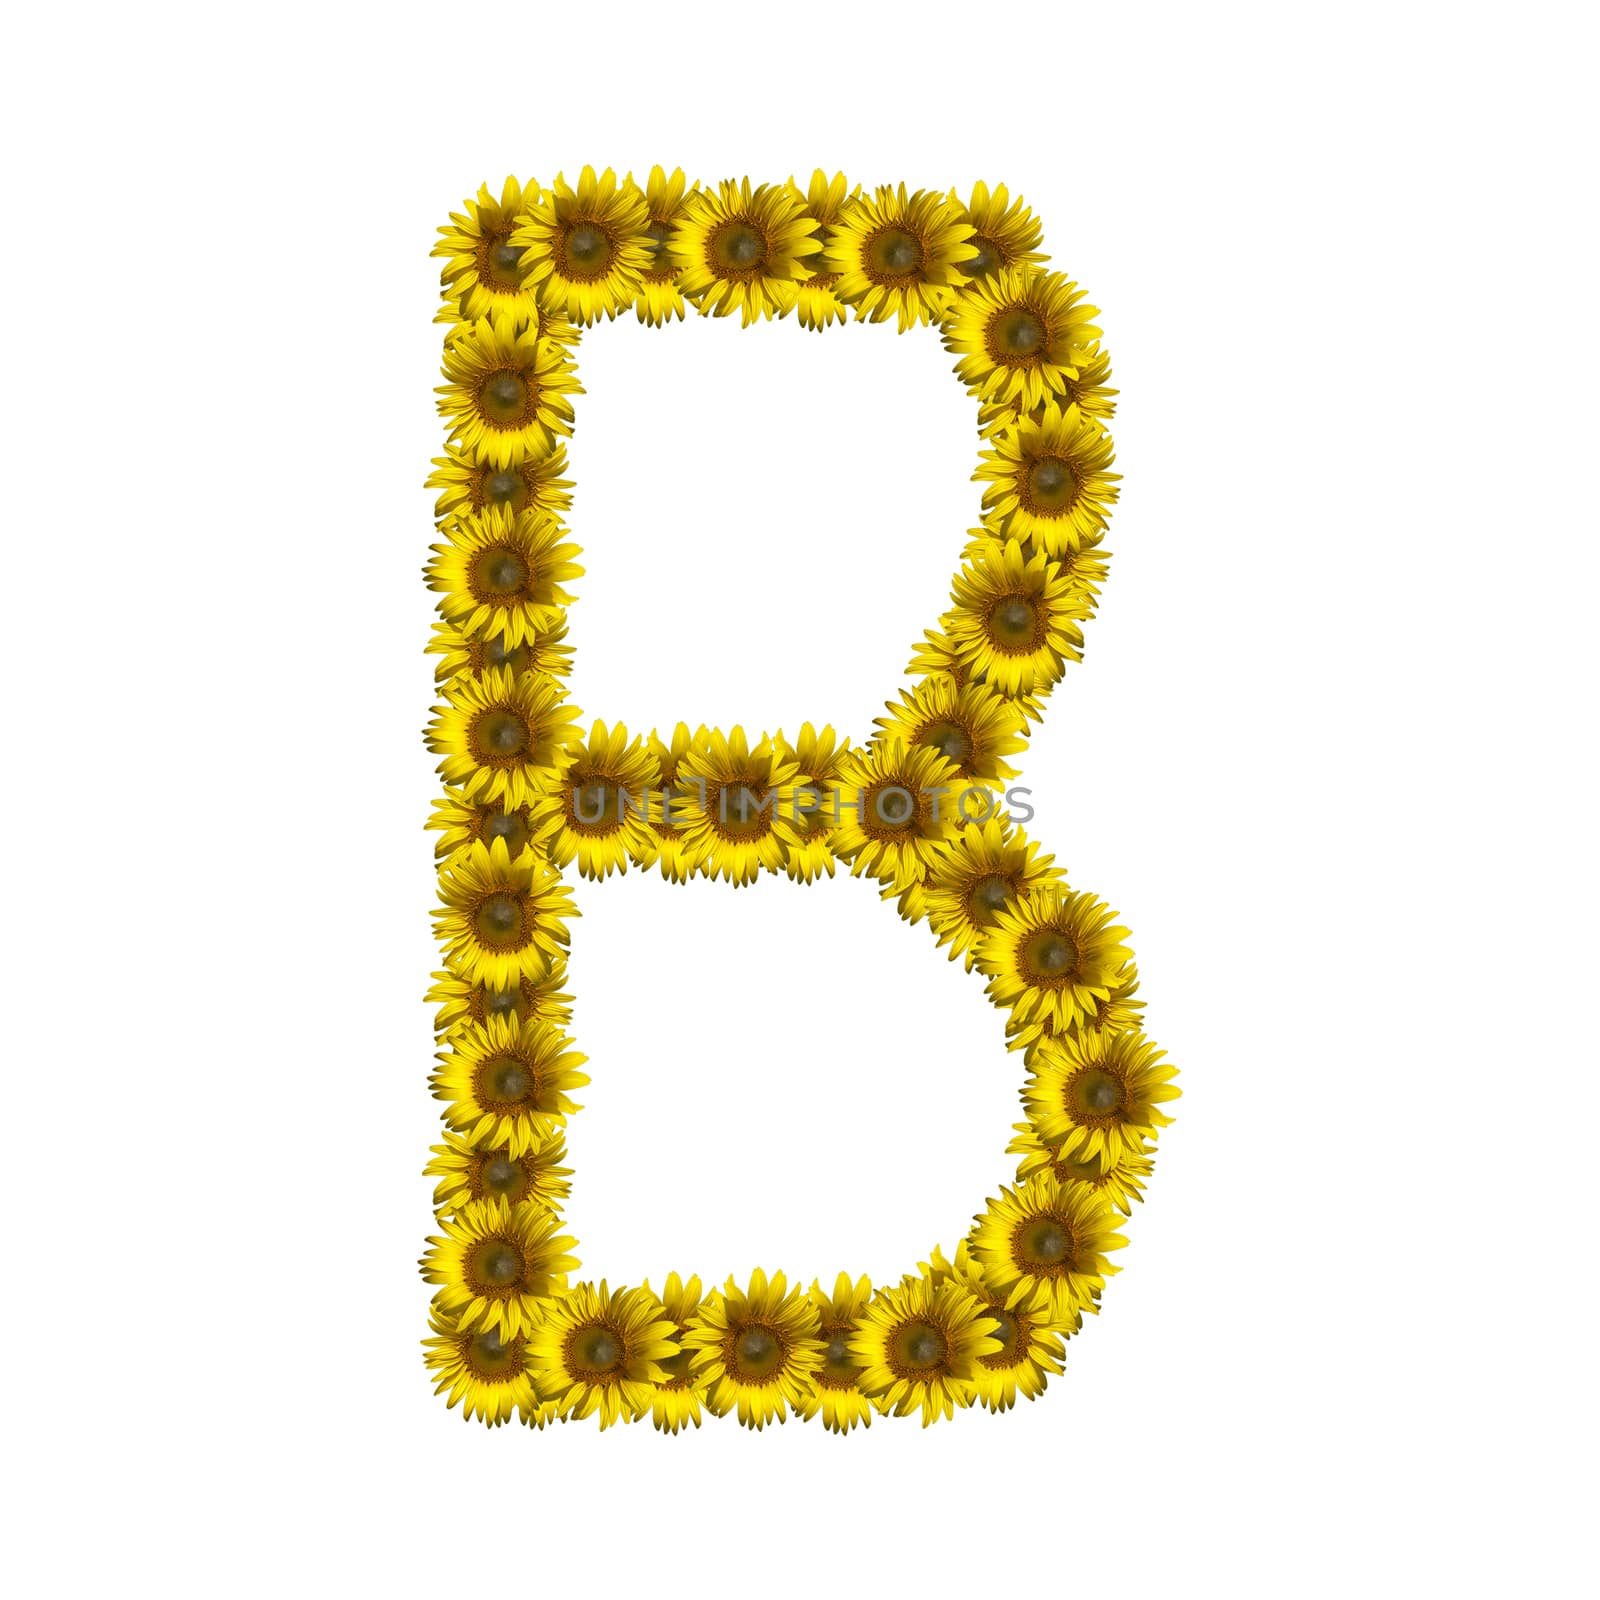 Isolated sunflower alphabet B by Exsodus